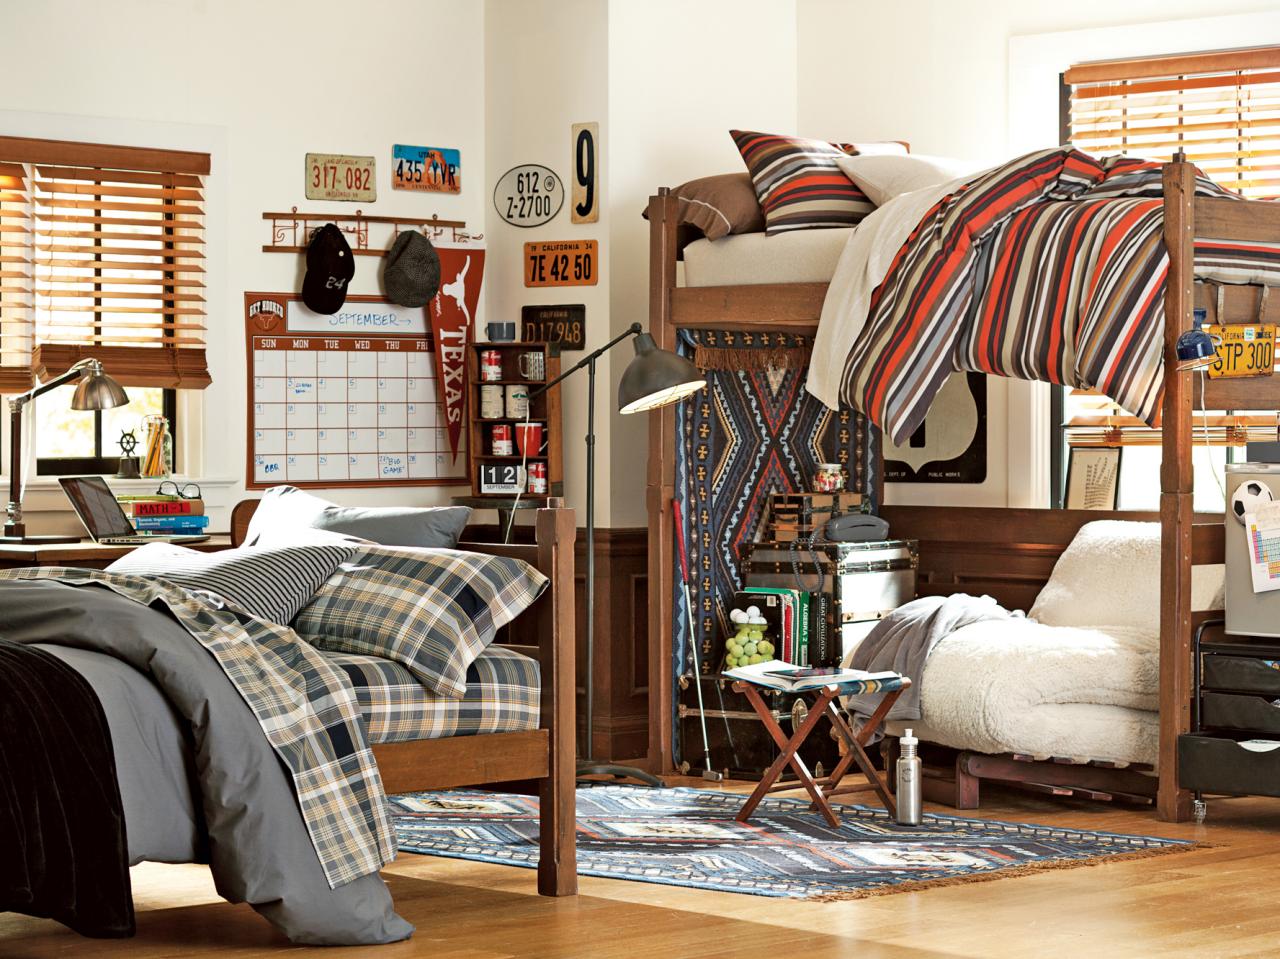 15 Amazing College Bedroom Design Ideas - Decoration Love